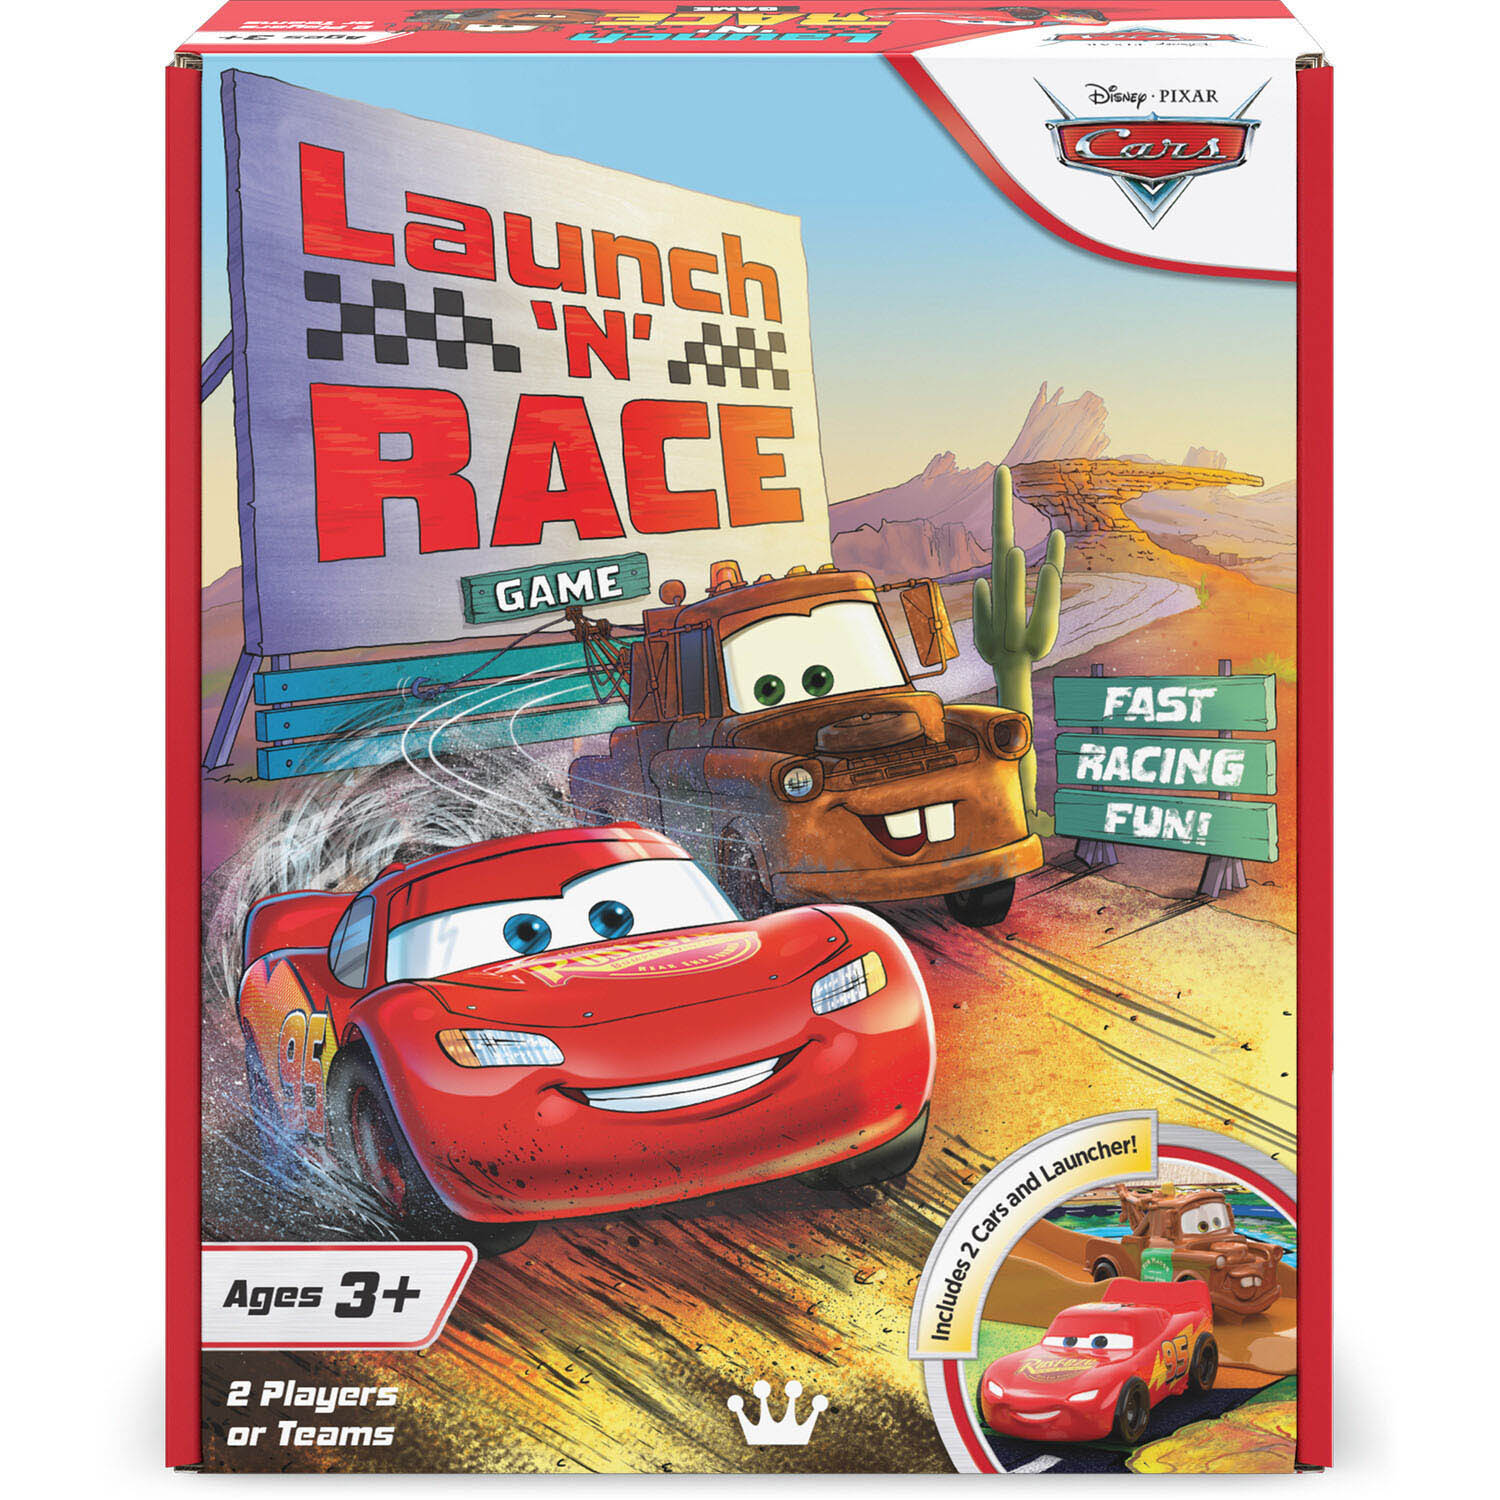 Disney Pixar Cars Launch N Race Game - Red Image 1